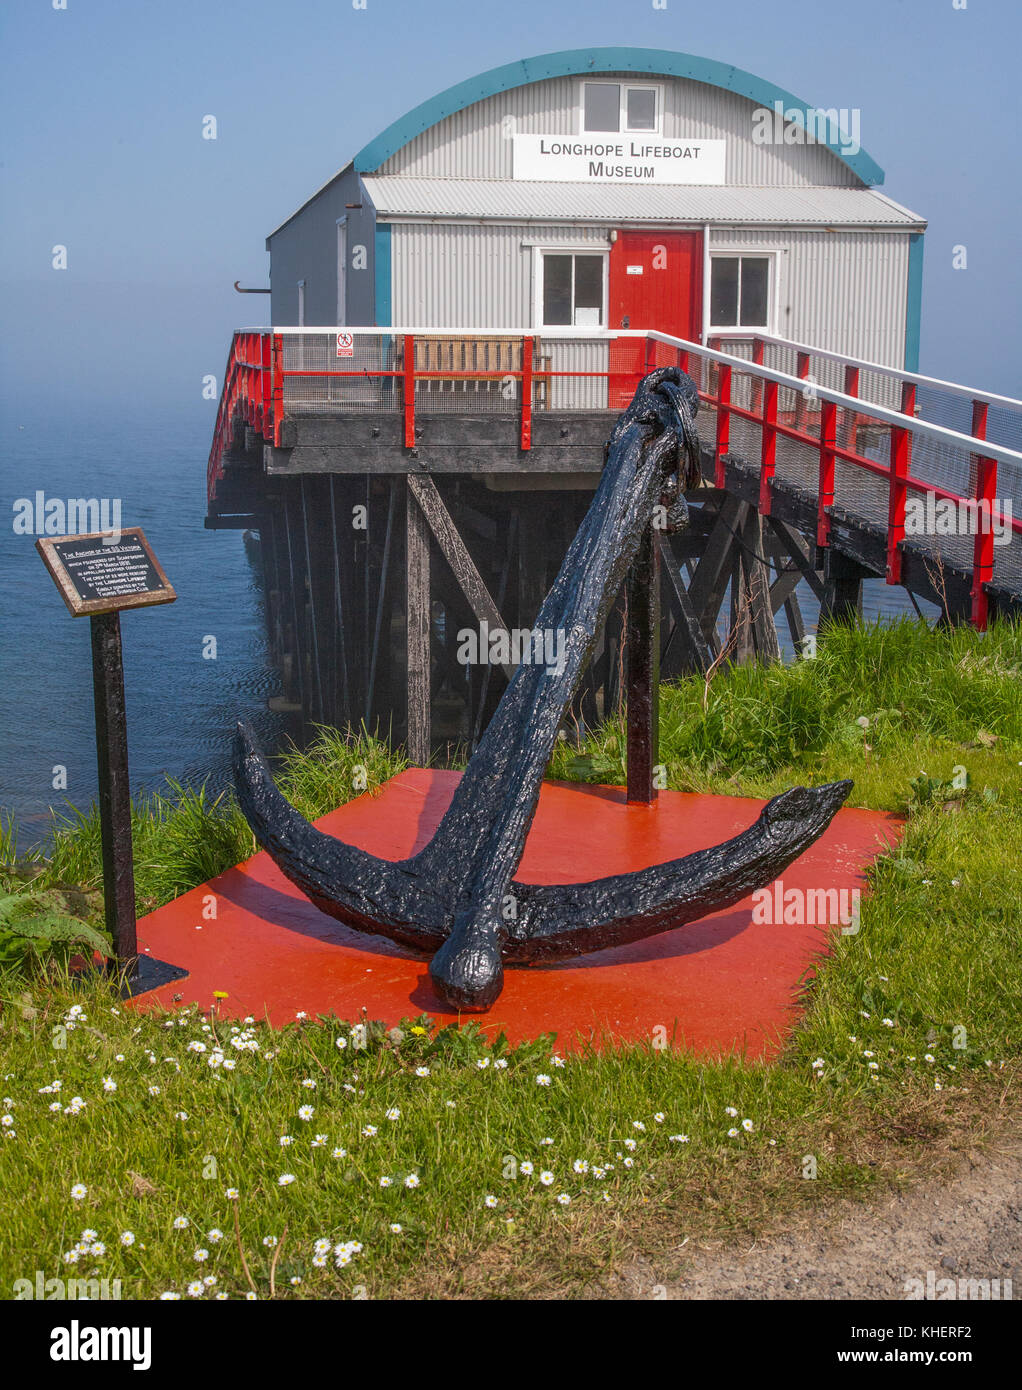 A longhope scialuppa di salvataggio museum hoy Orkney Isles. Foto Stock